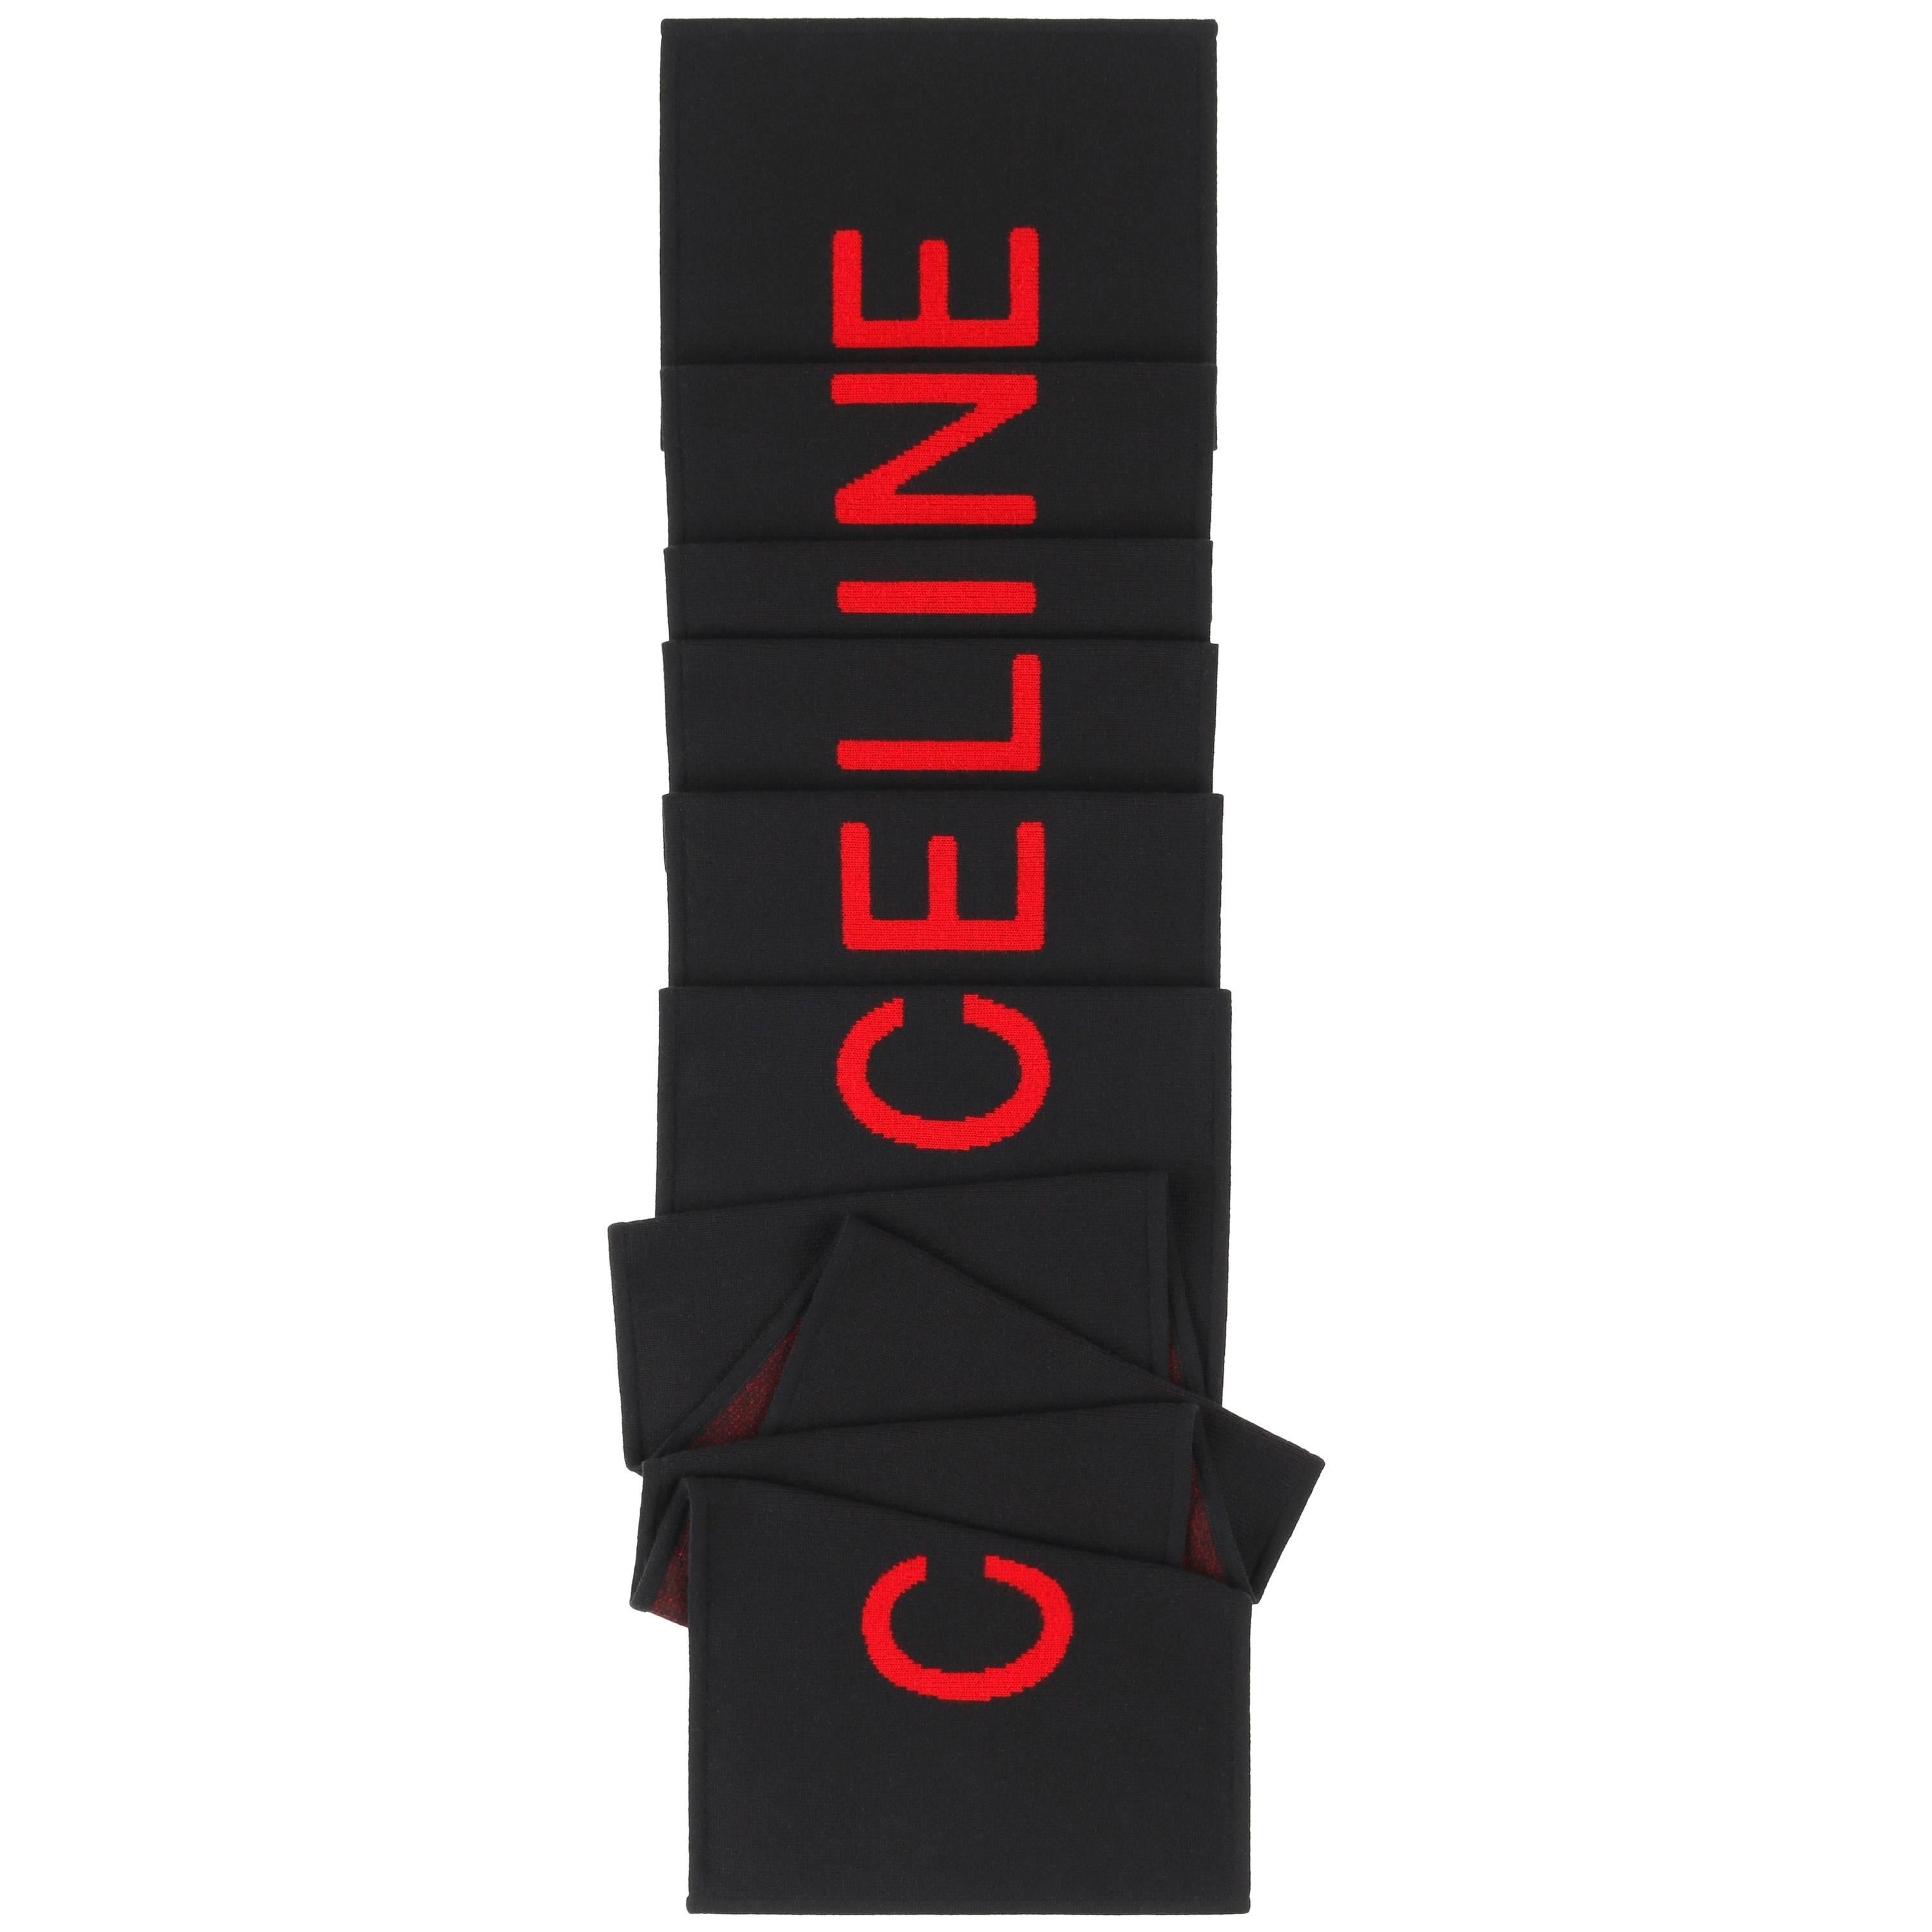 CELINE Red on Black "Celine" Double Knit Oblong Oversized Signature Scarf